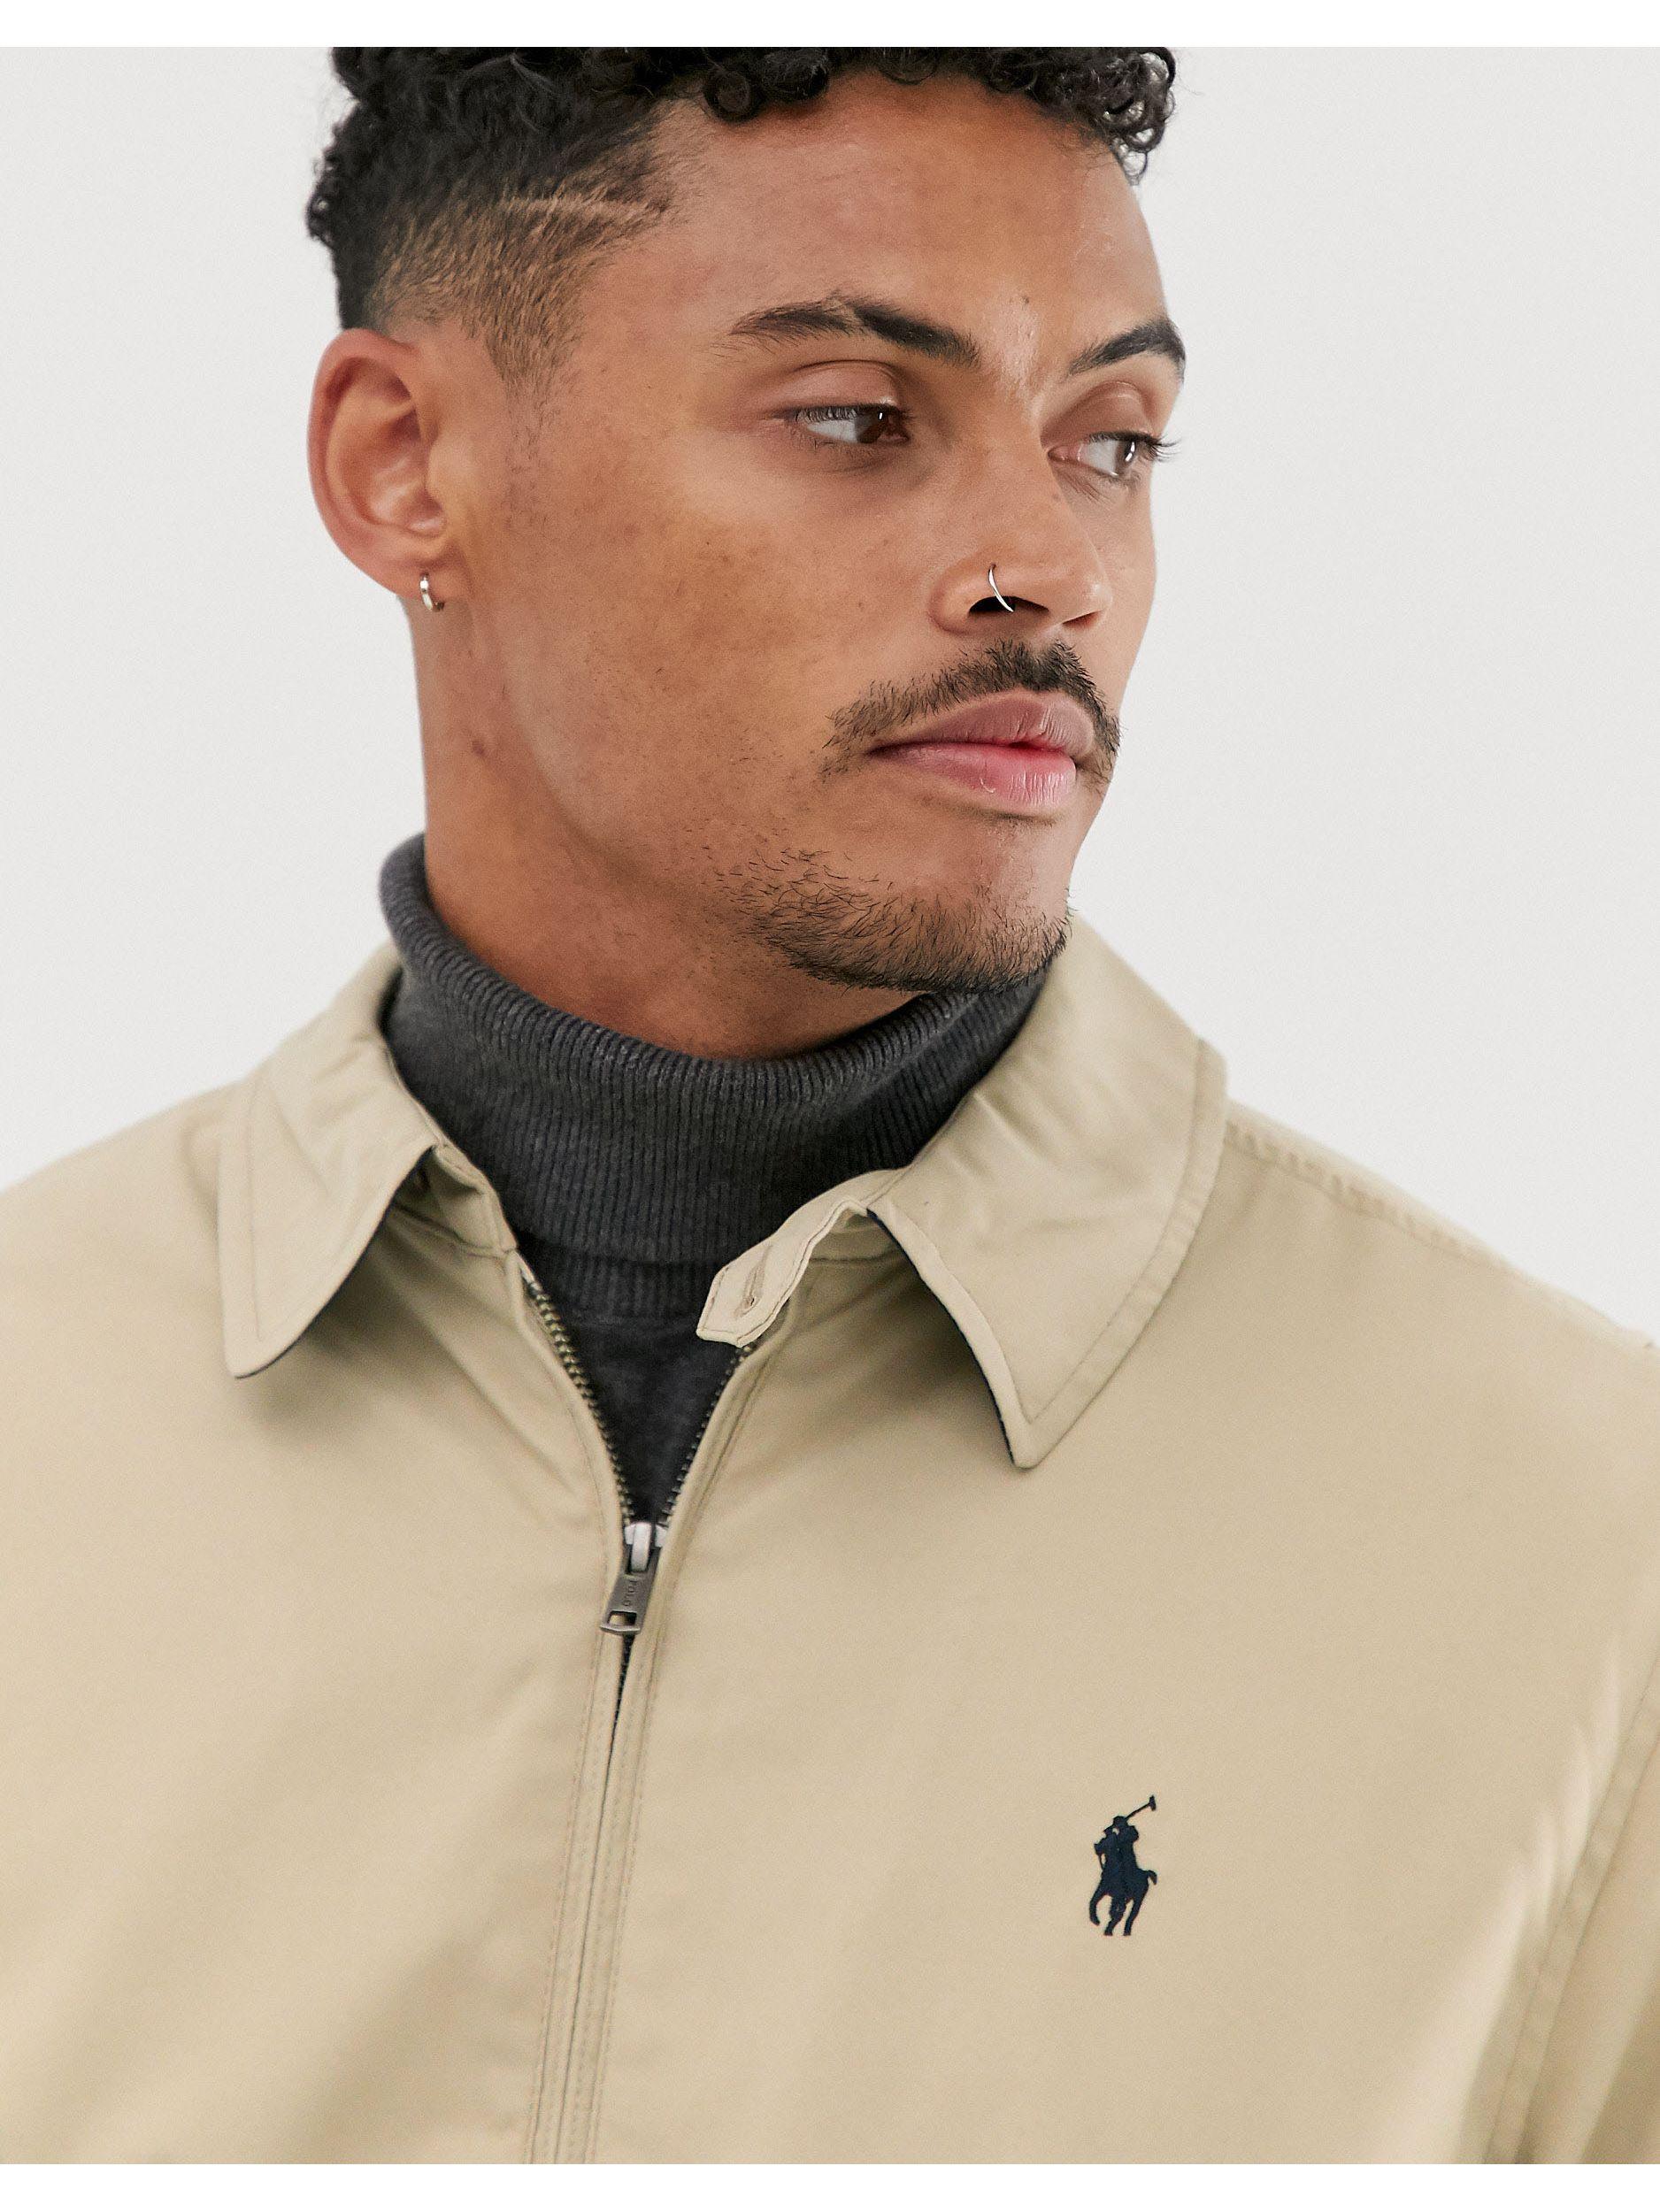 Polo Ralph Lauren Harrington Jacket in Natural for Men | Lyst